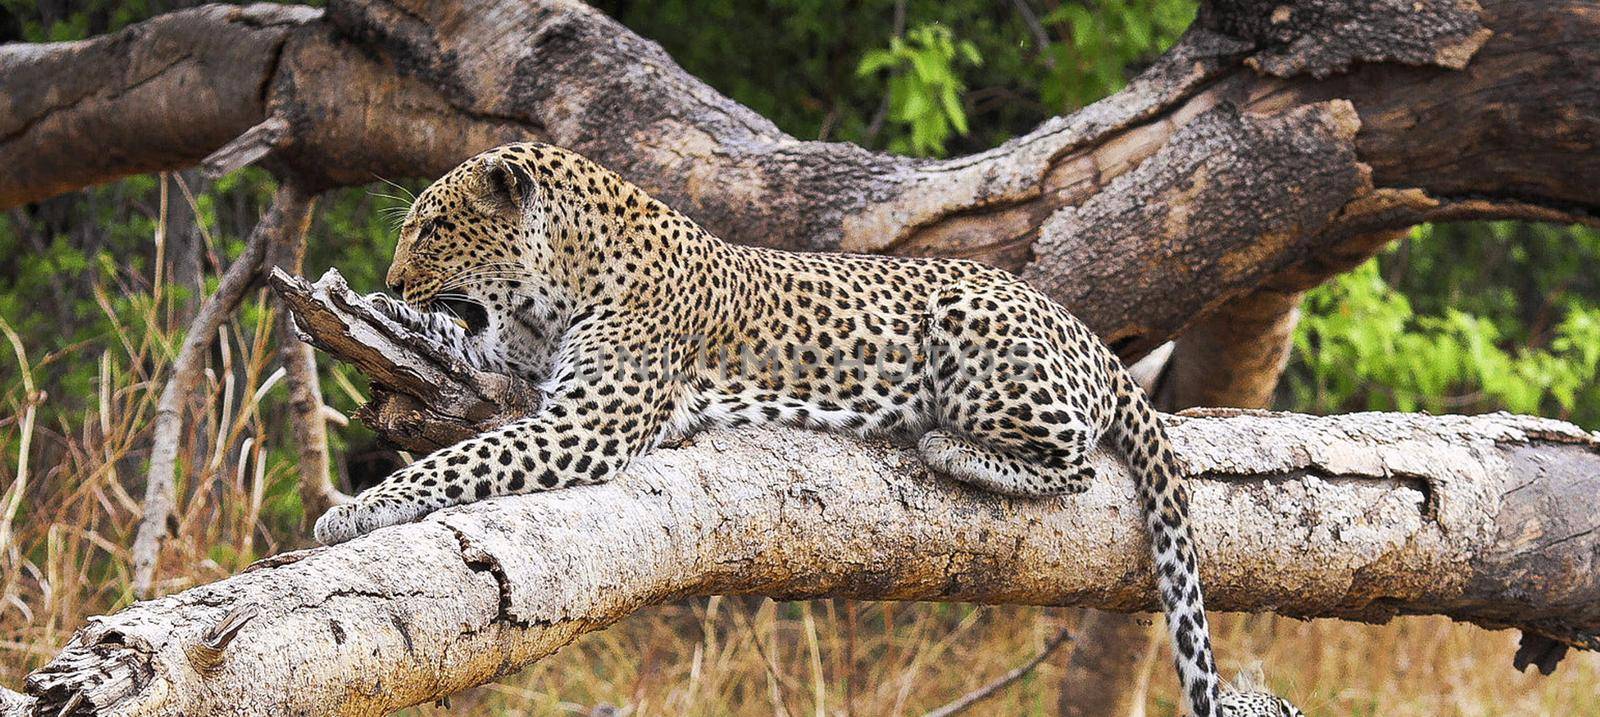 Moremi, Botswana wildlife  Pictures by TravelSync27